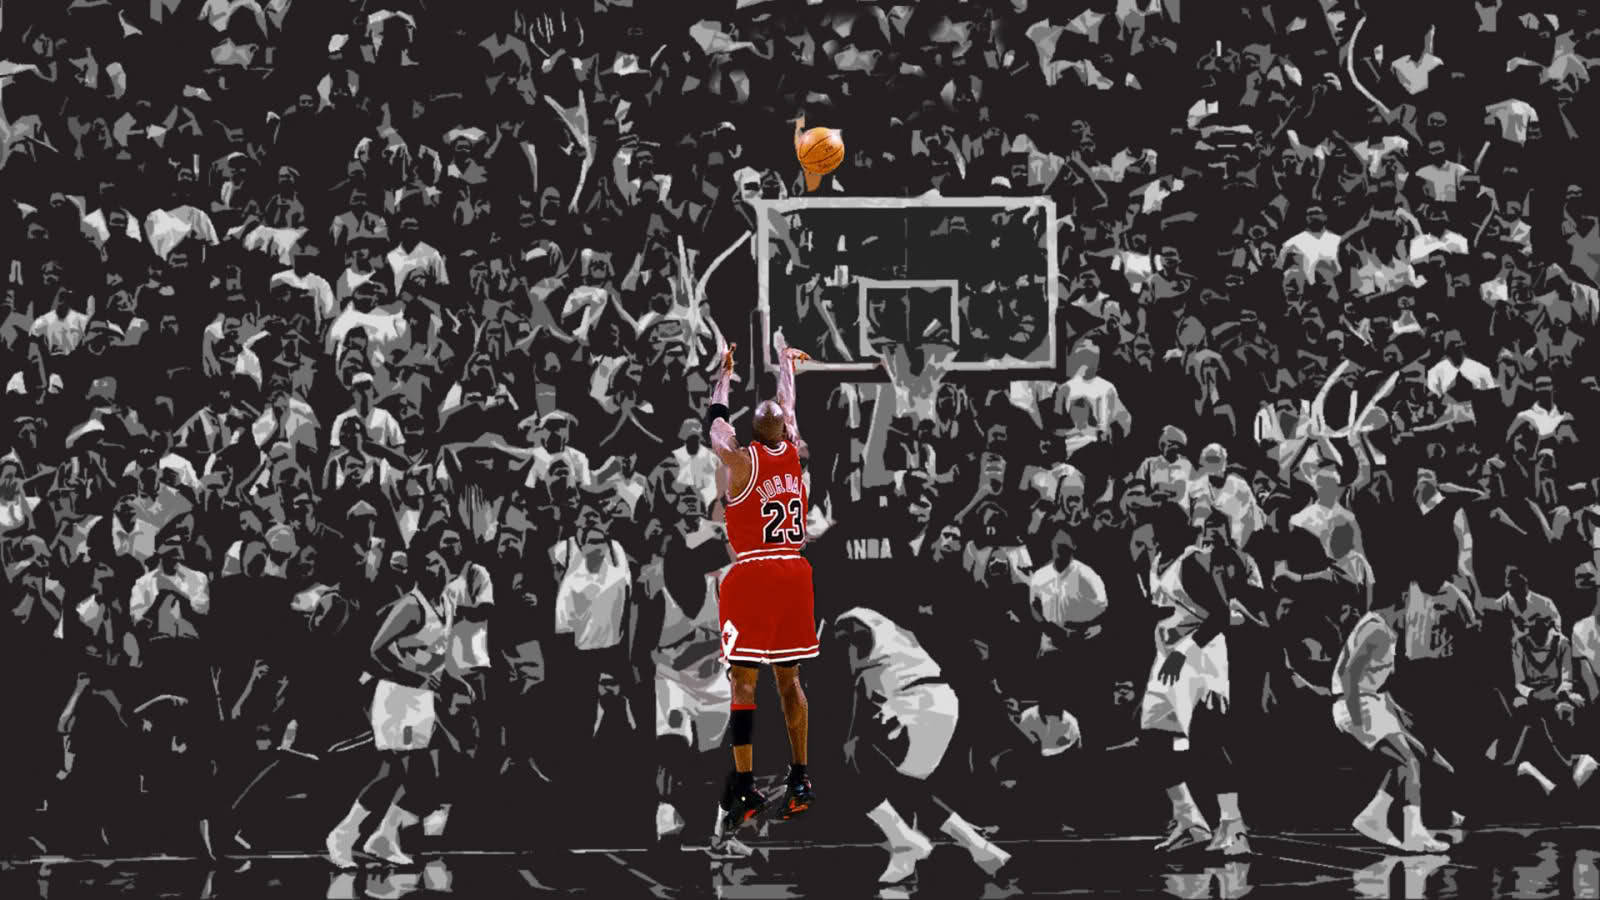 Highlighted Michael Jordan